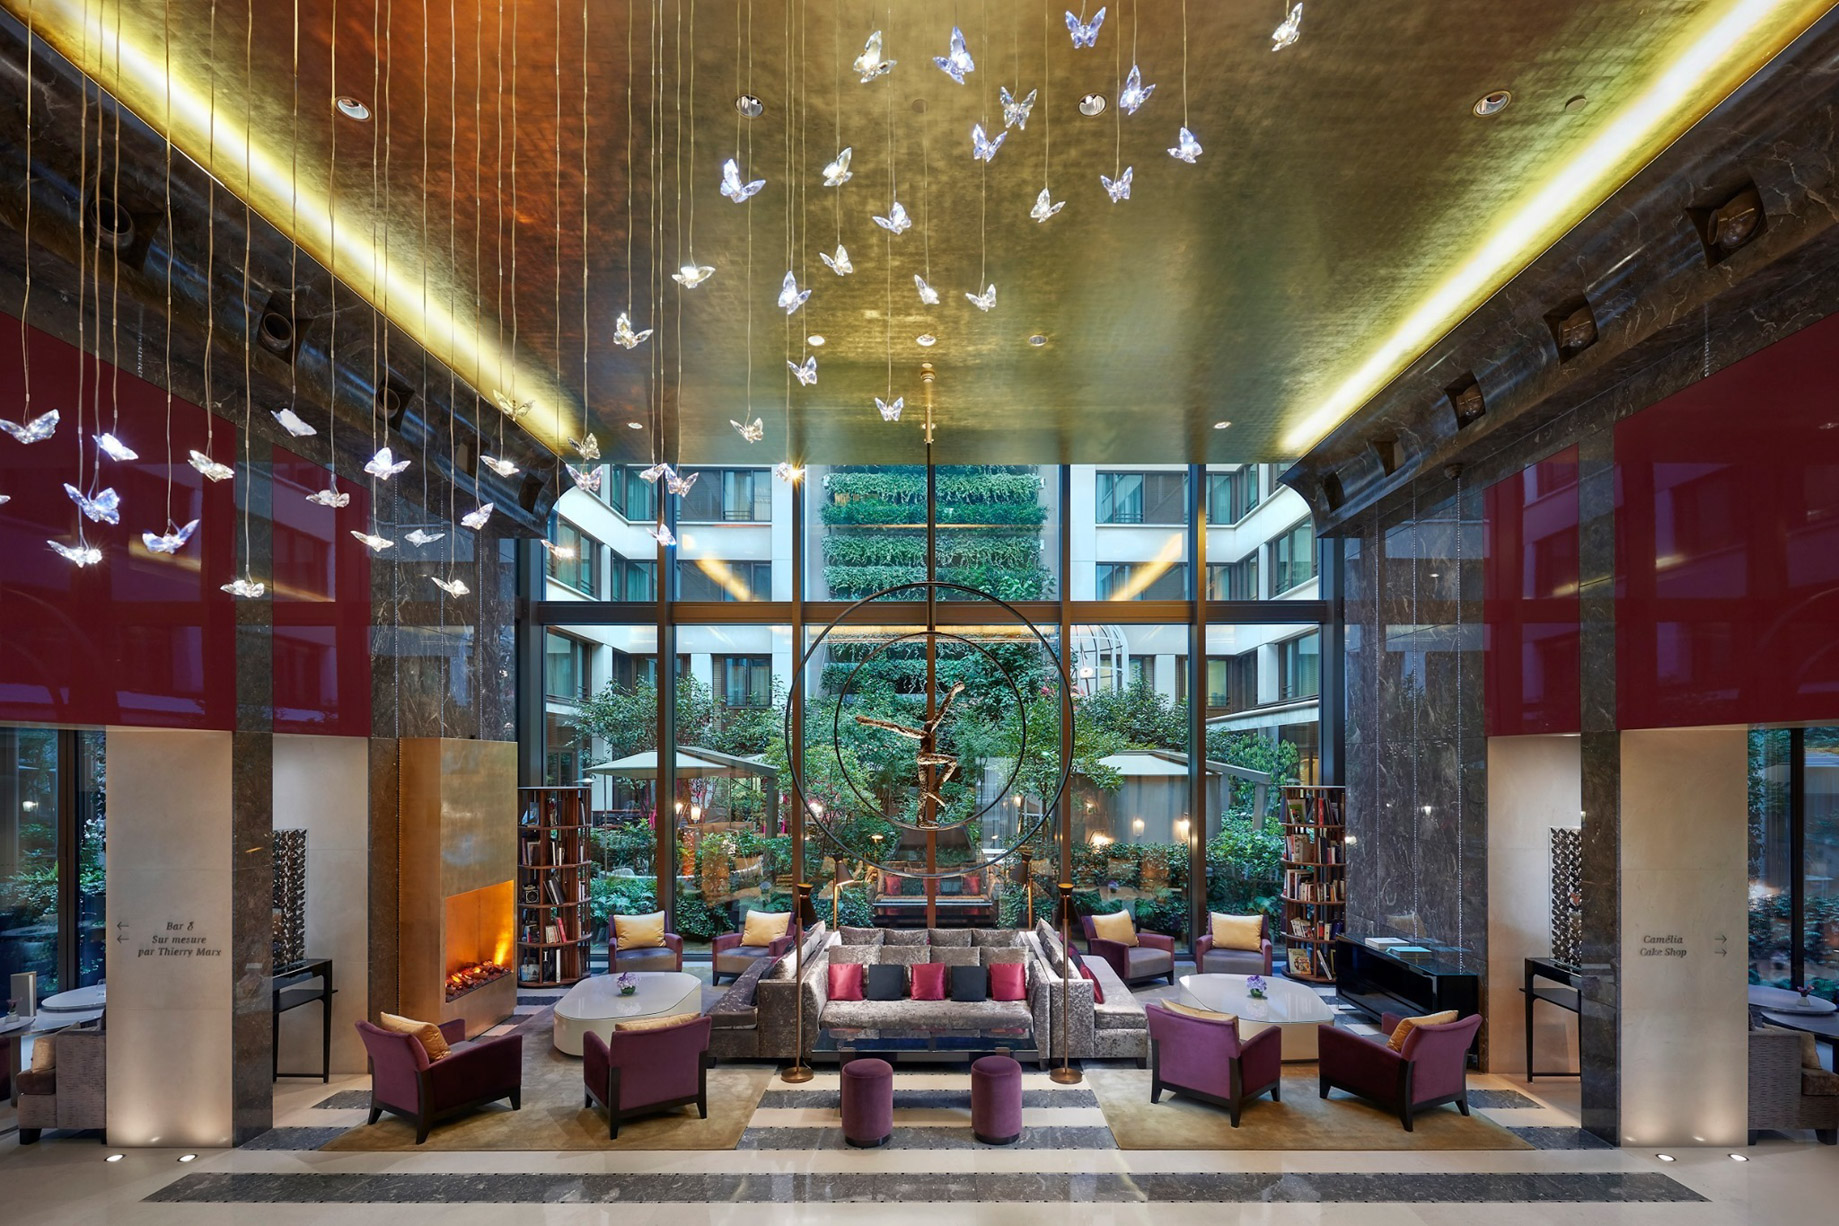 Mandarin Oriental, Paris Hotel - Paris, France - Lobby